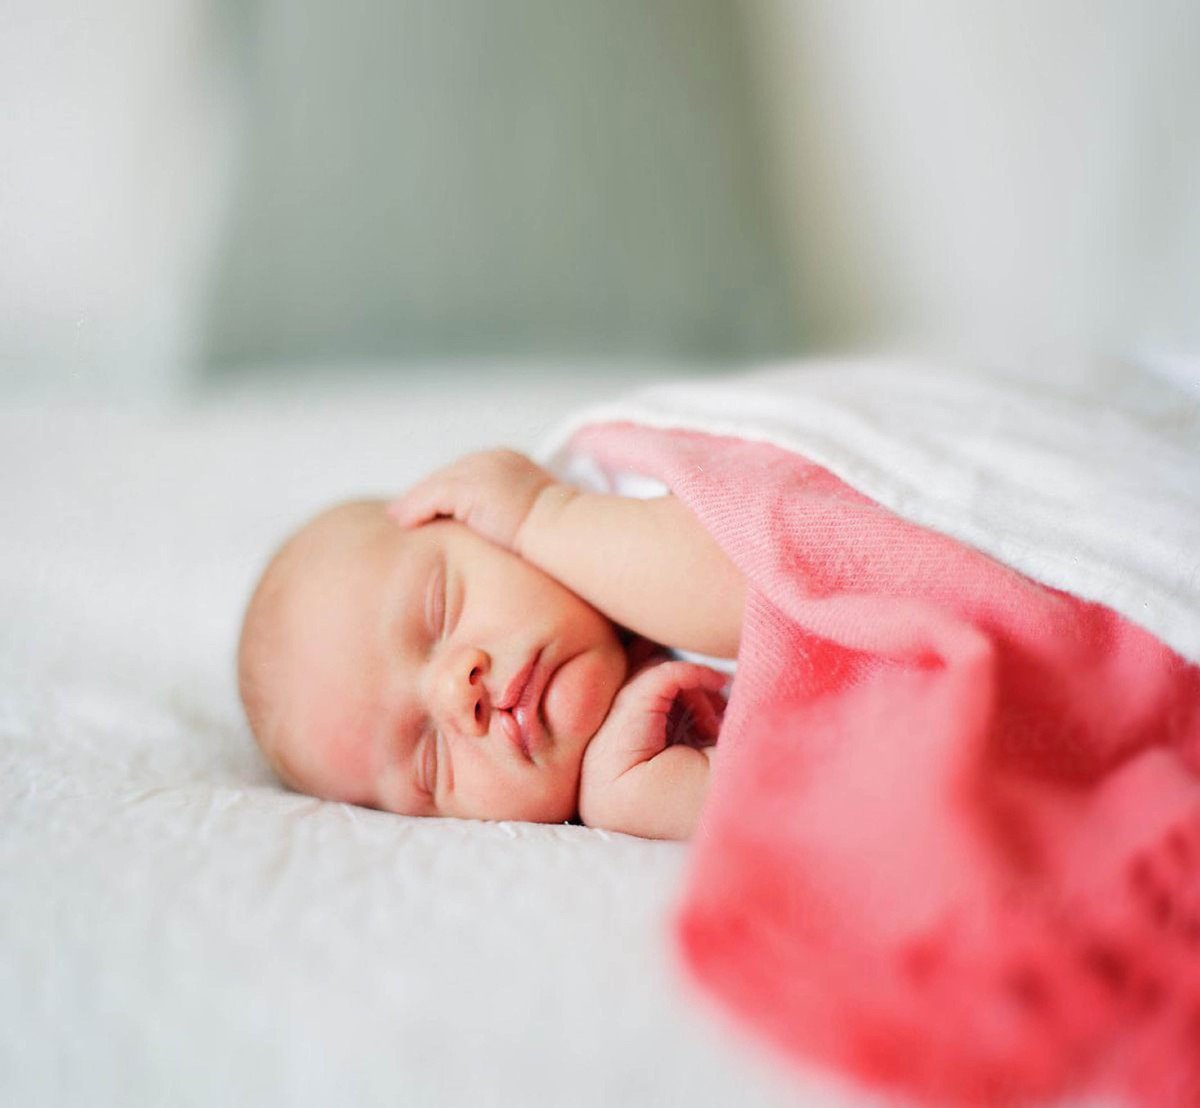 DIANGGARKAN kelahiran bayi dengan masalah klef di negara ini adalah satu di dalam setiap 1,000 kelahiran.